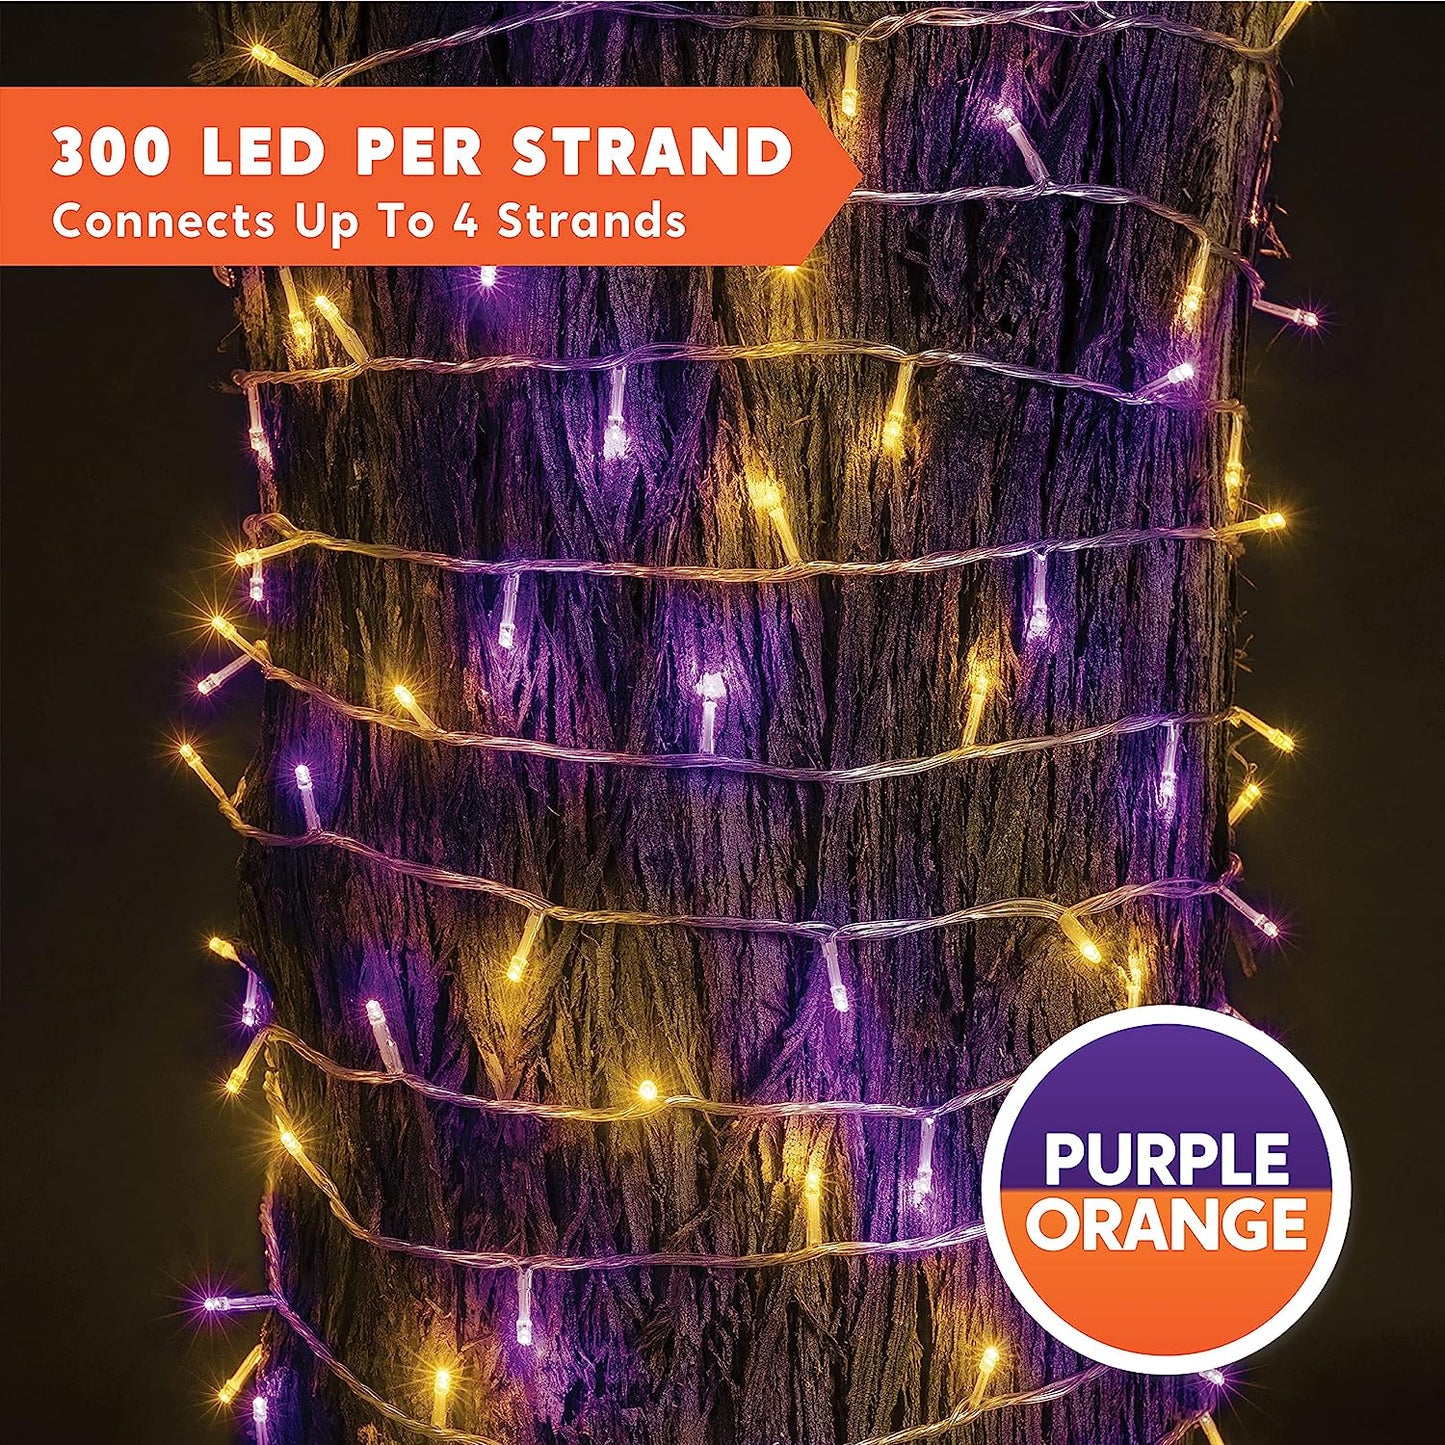 98.1 FT Orange & Purple LED 8 Modes Clear Wire Mini Light Set